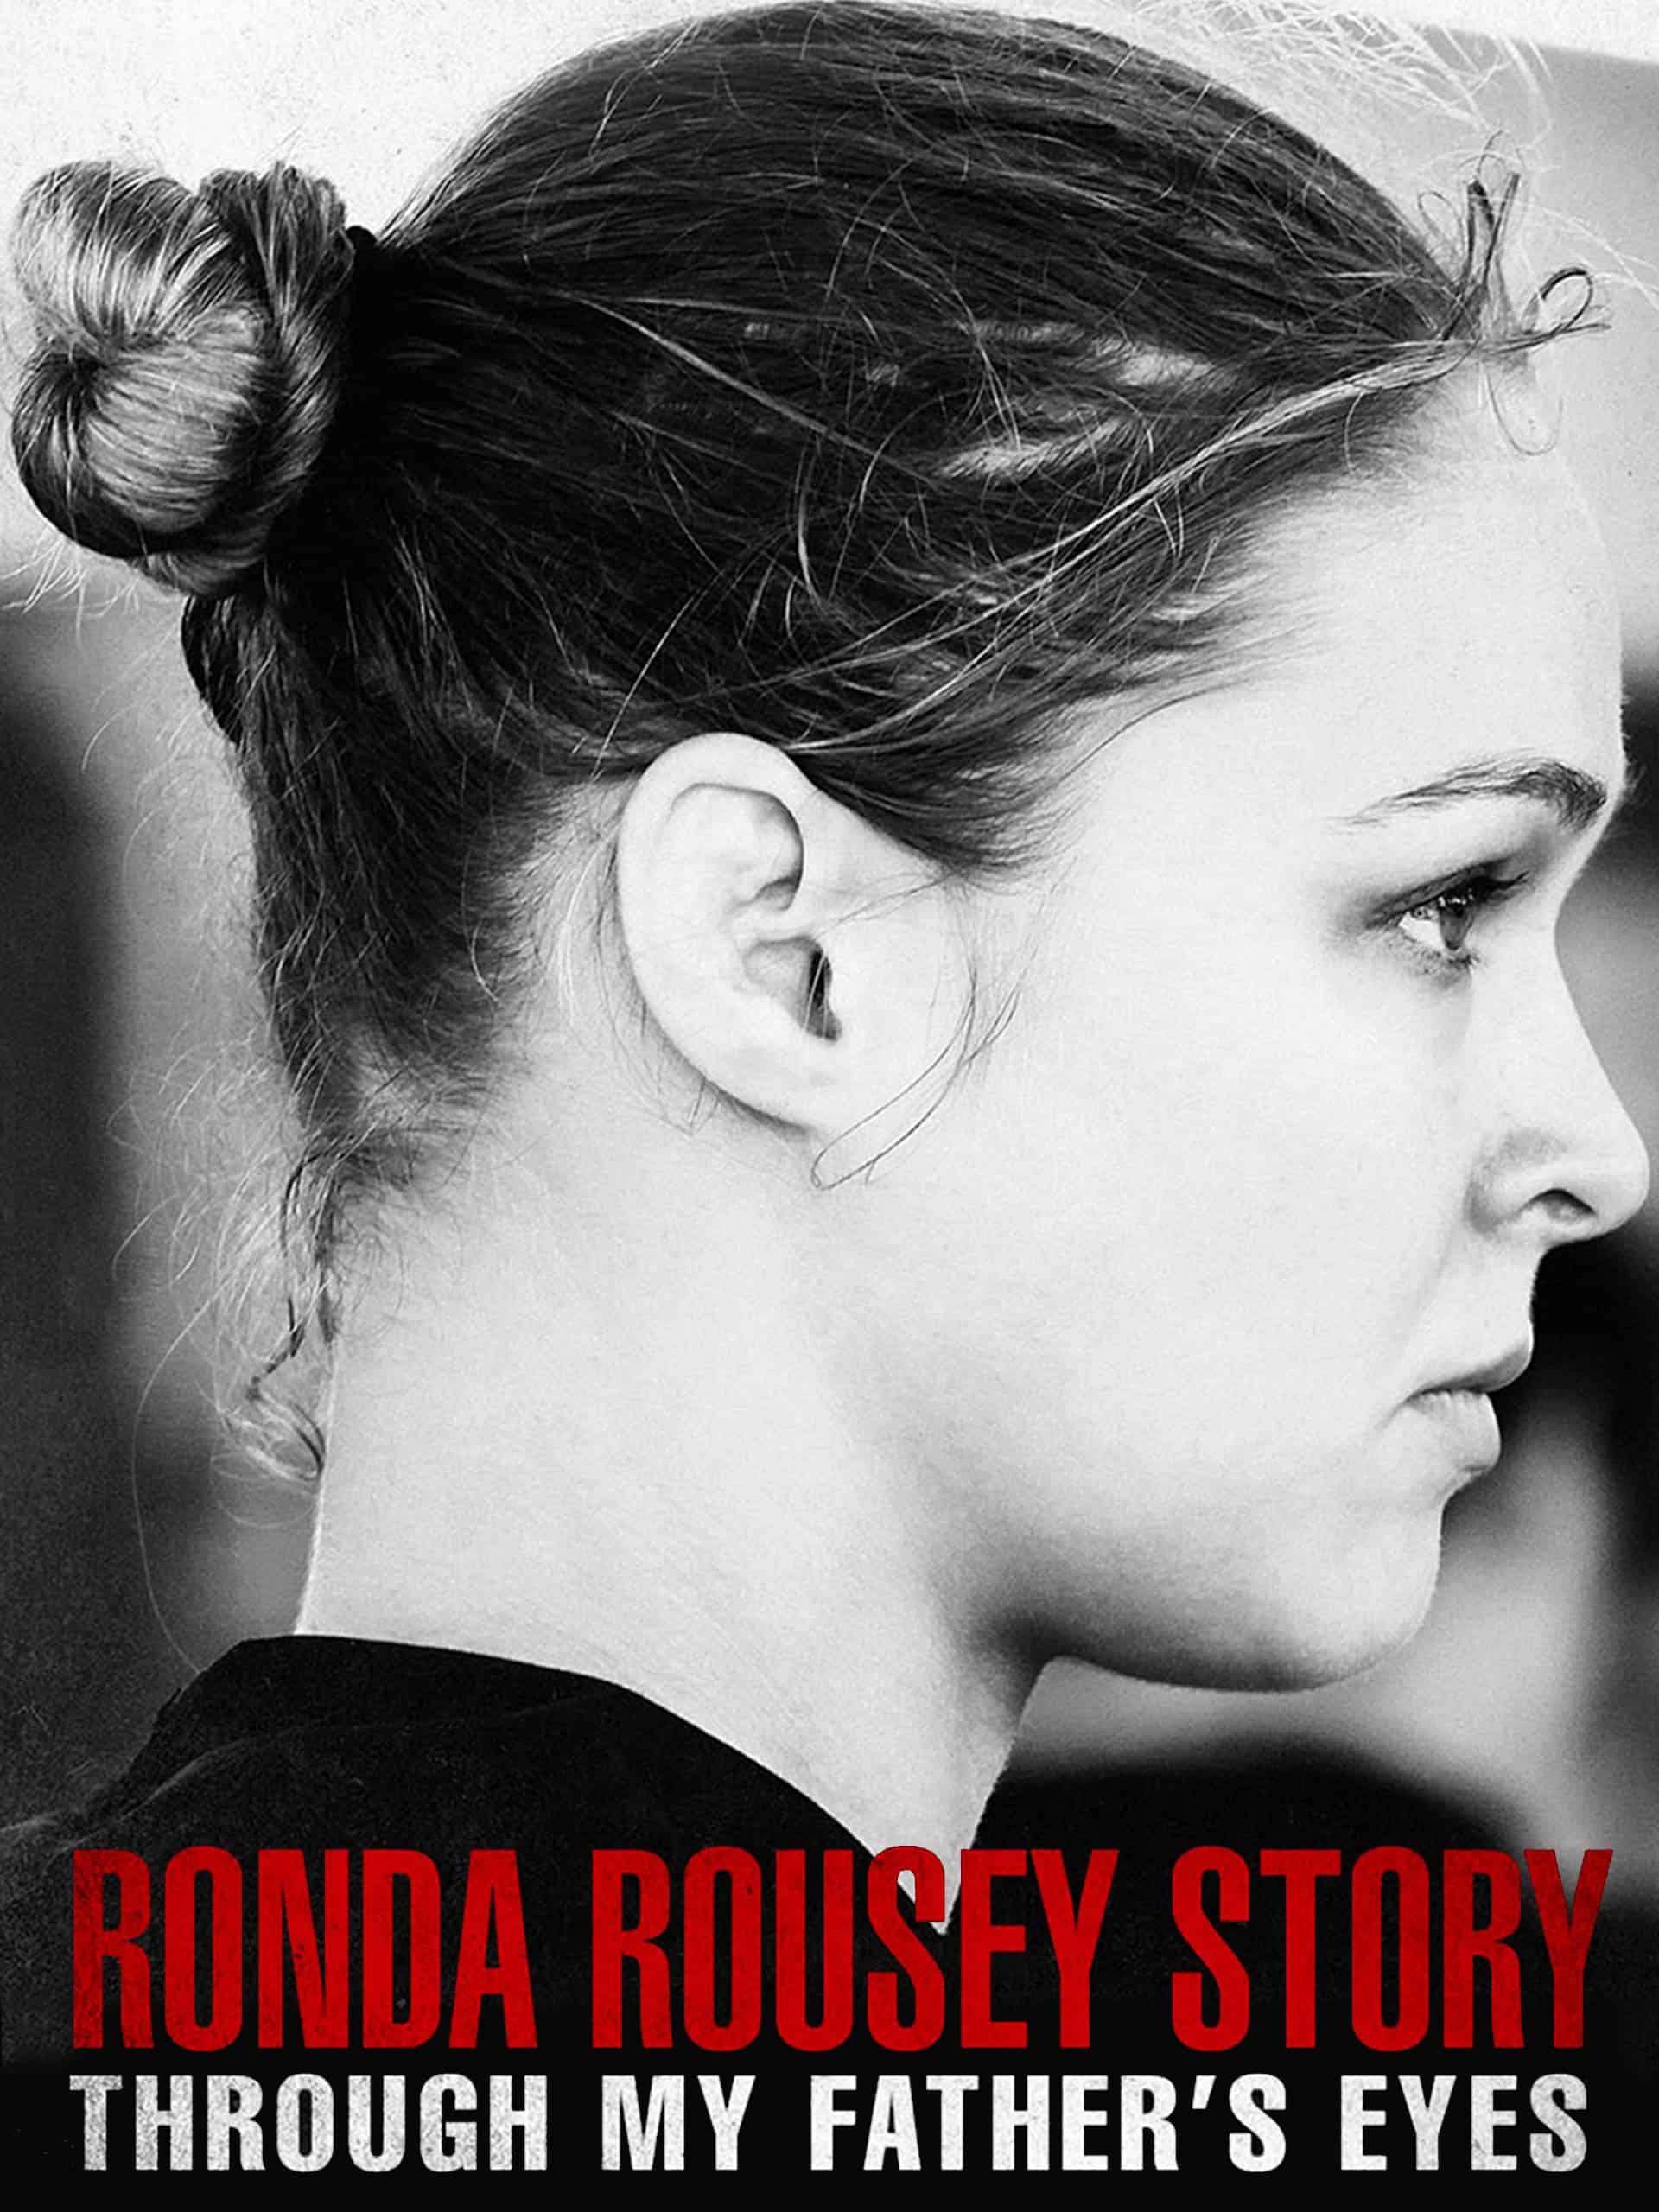 The Ronda Rousey Story Through My Father s Eyes (2019) มองผ่านสายตาพ่อ เรื่องราวชีวิตของรอนด้า ราวซีย์